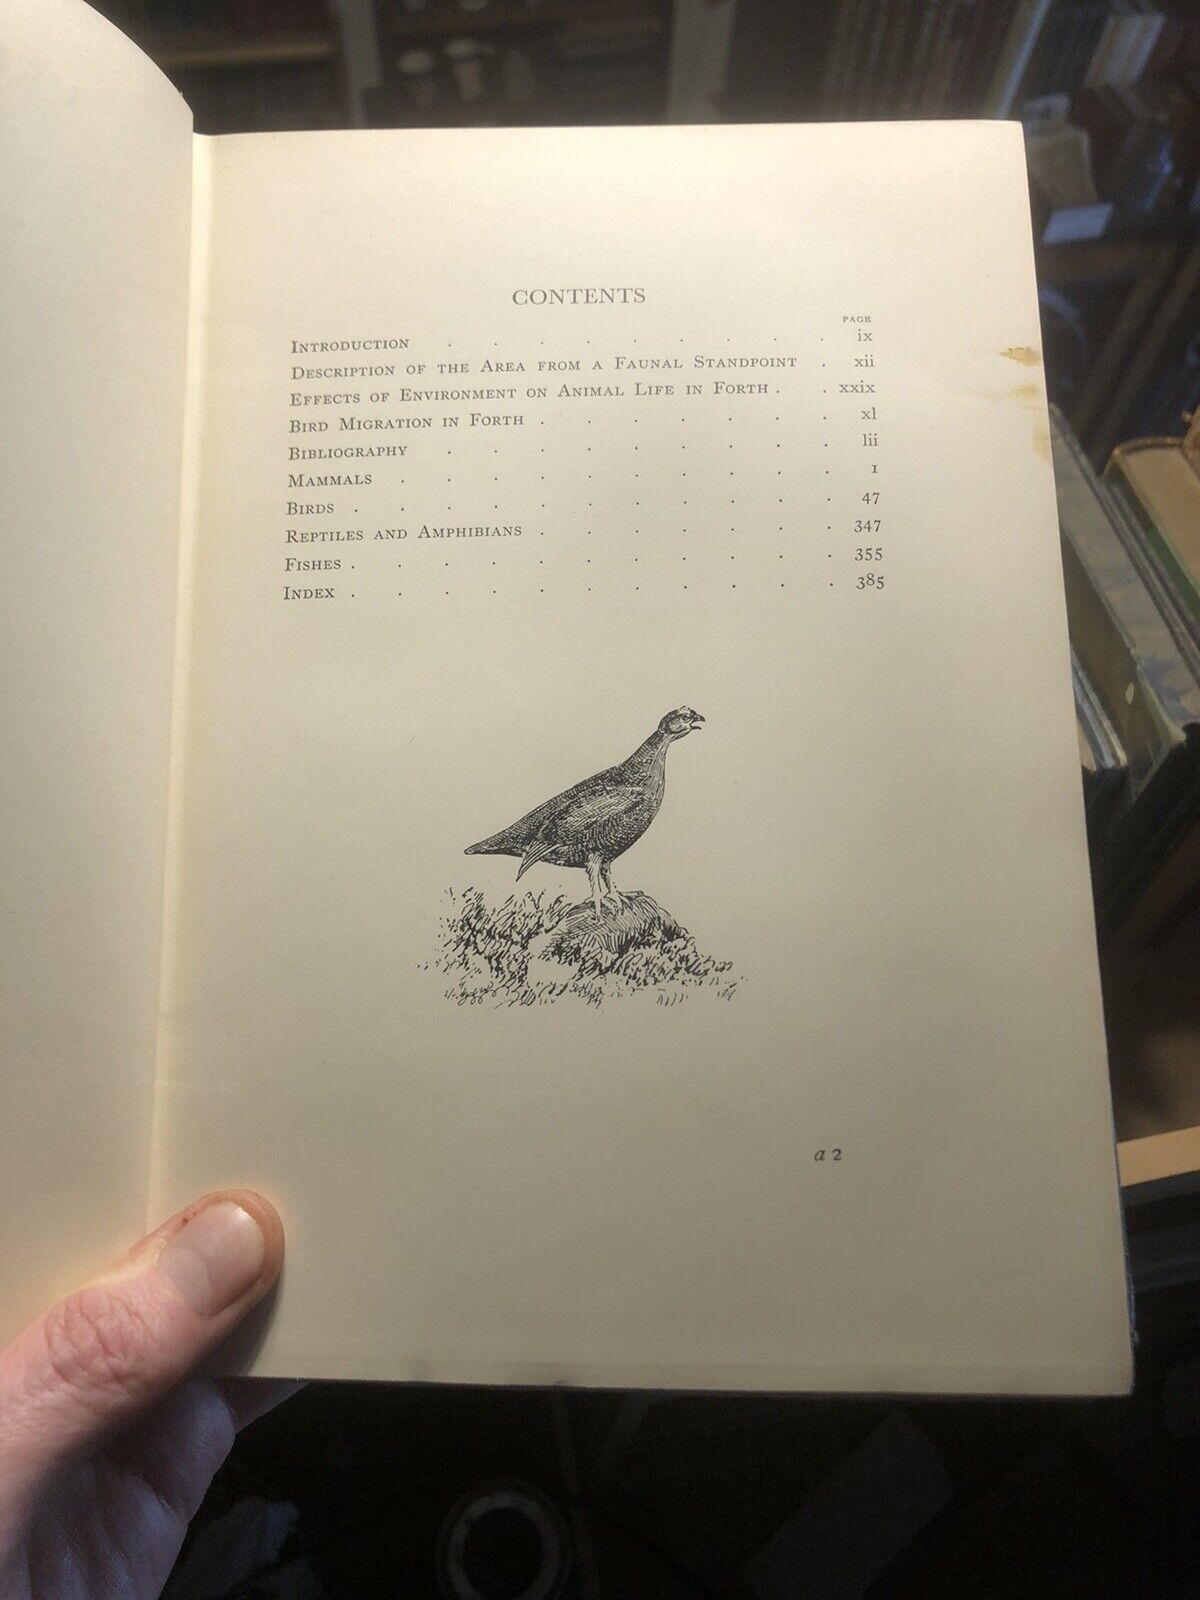 Vertebrate Fauna of the Forth : Rintoul &amp; Baxter : Natural History : Ornithology